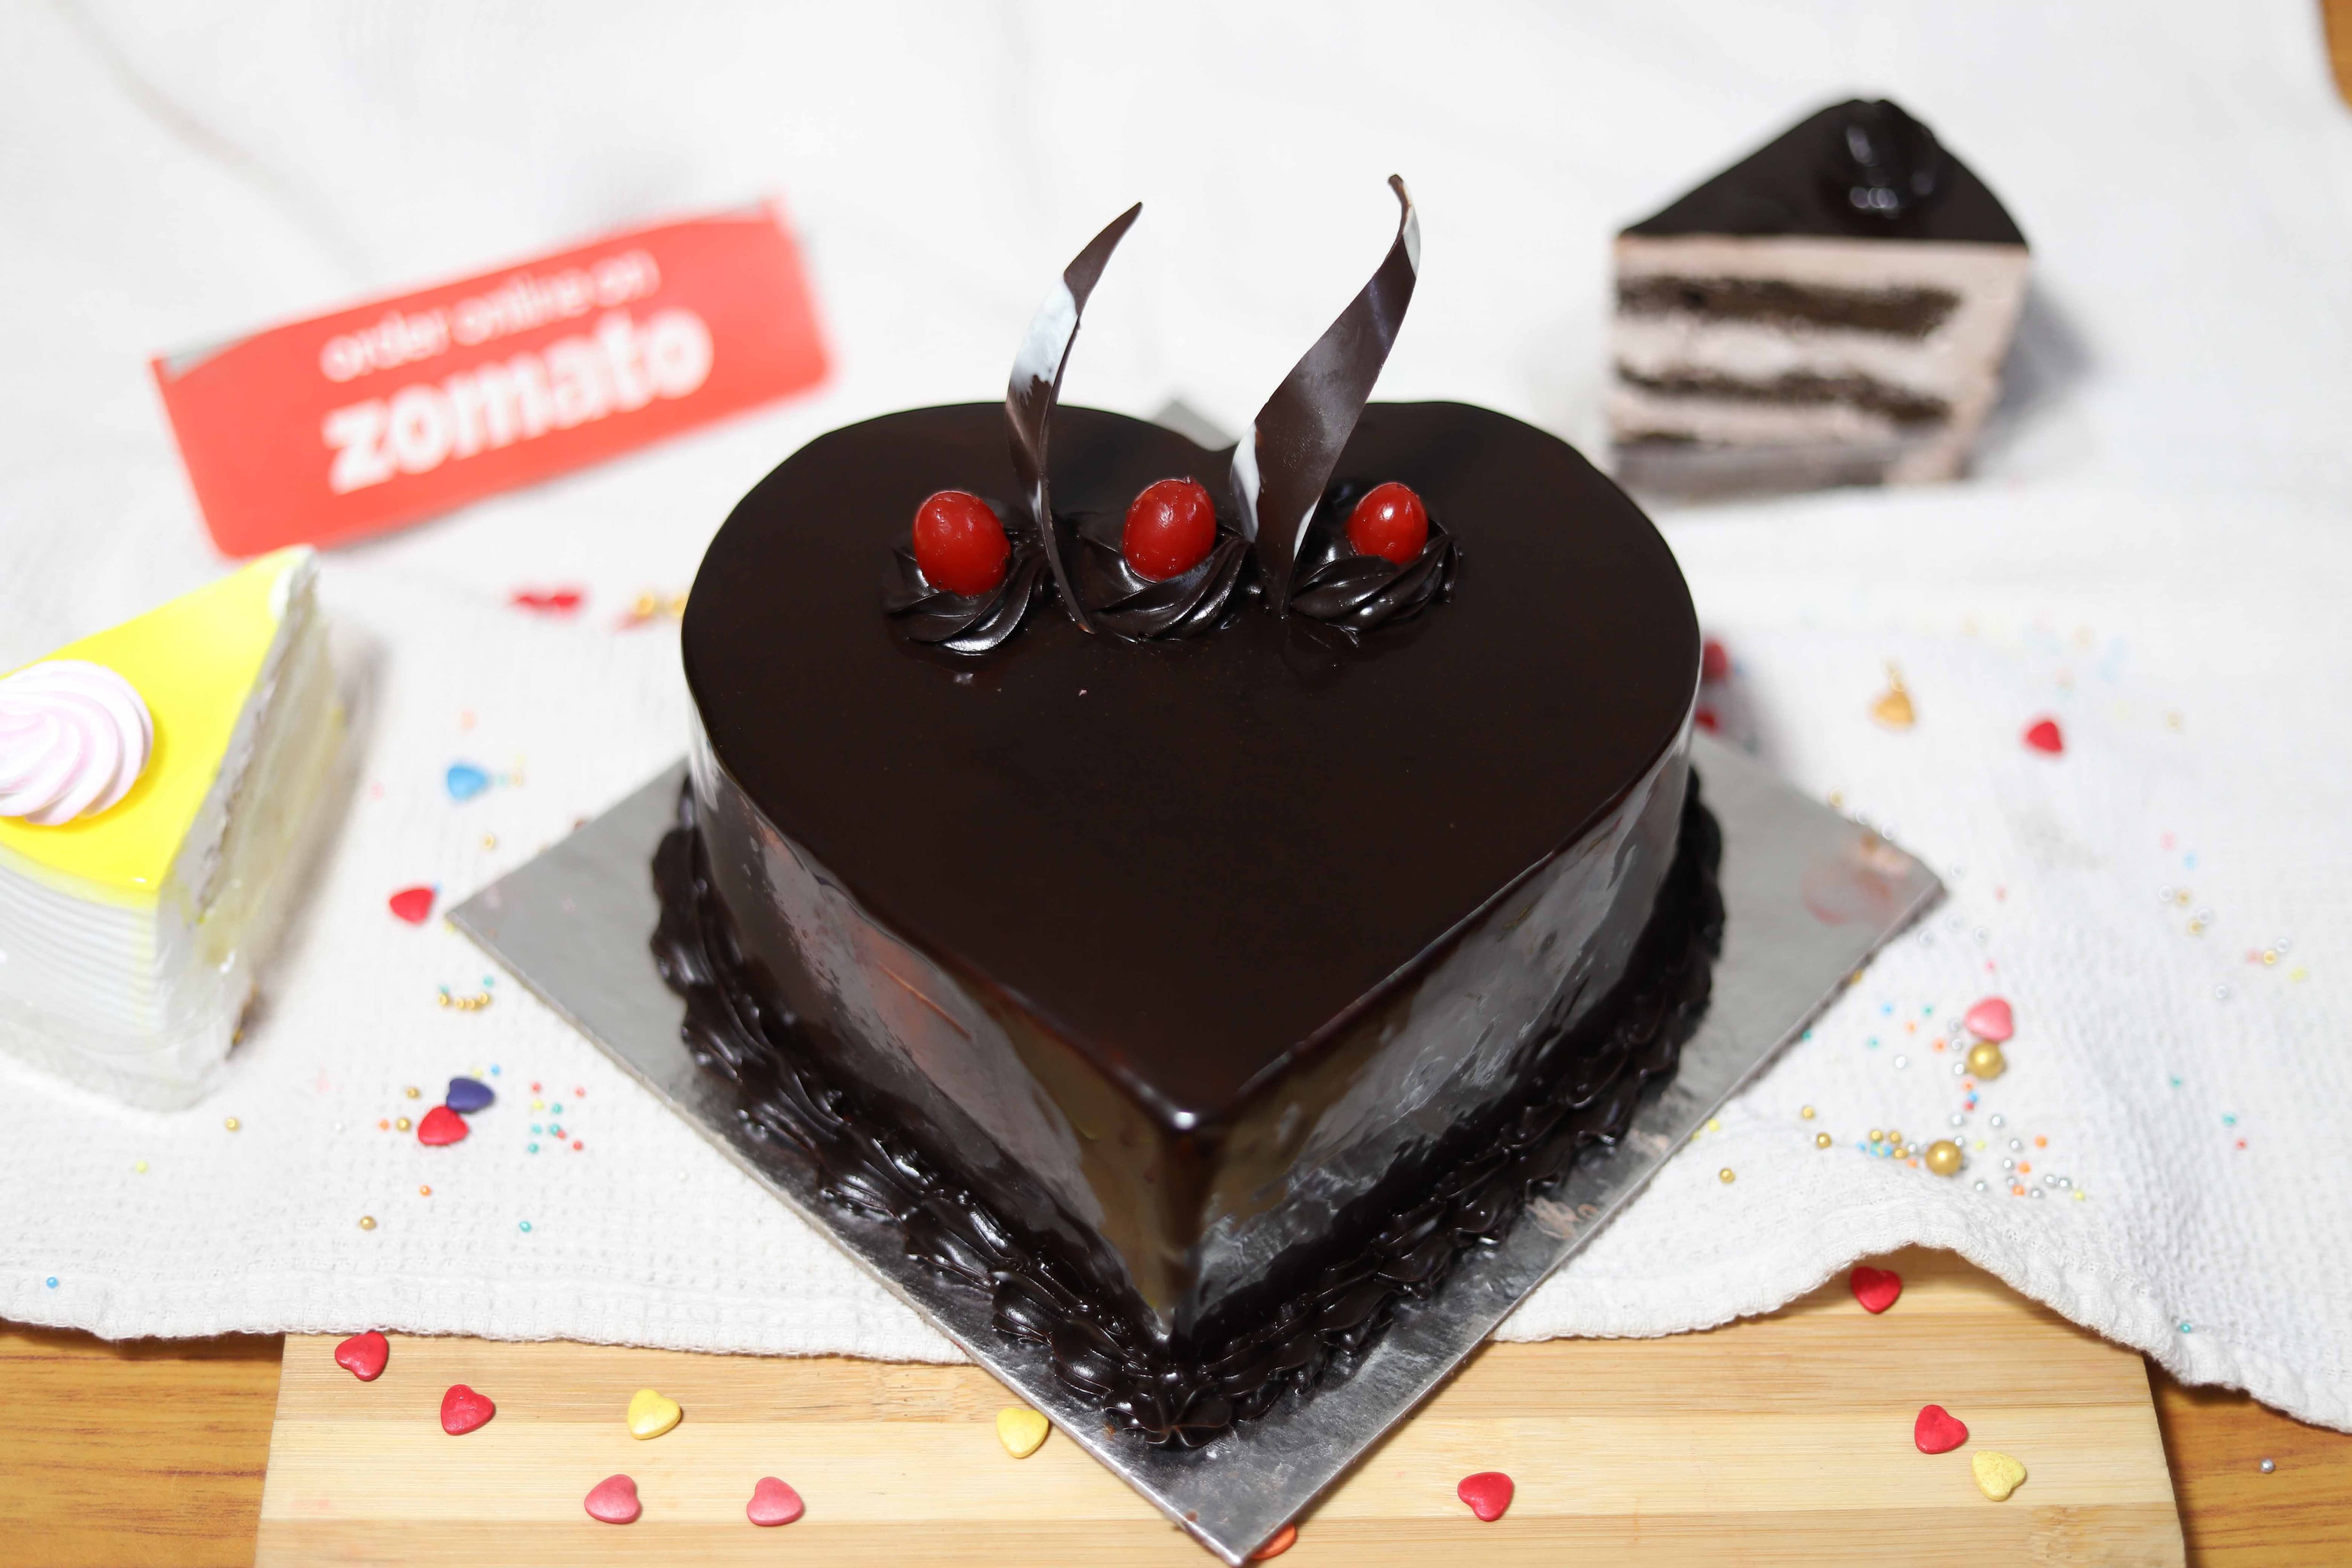 Tuxedo cake for a 50th birthday celebration 🖤💛 zomato #homebaker#sainikfarms#delicious#pretty#kidscakes#celebrationcake# birthdaycake... | Instagram